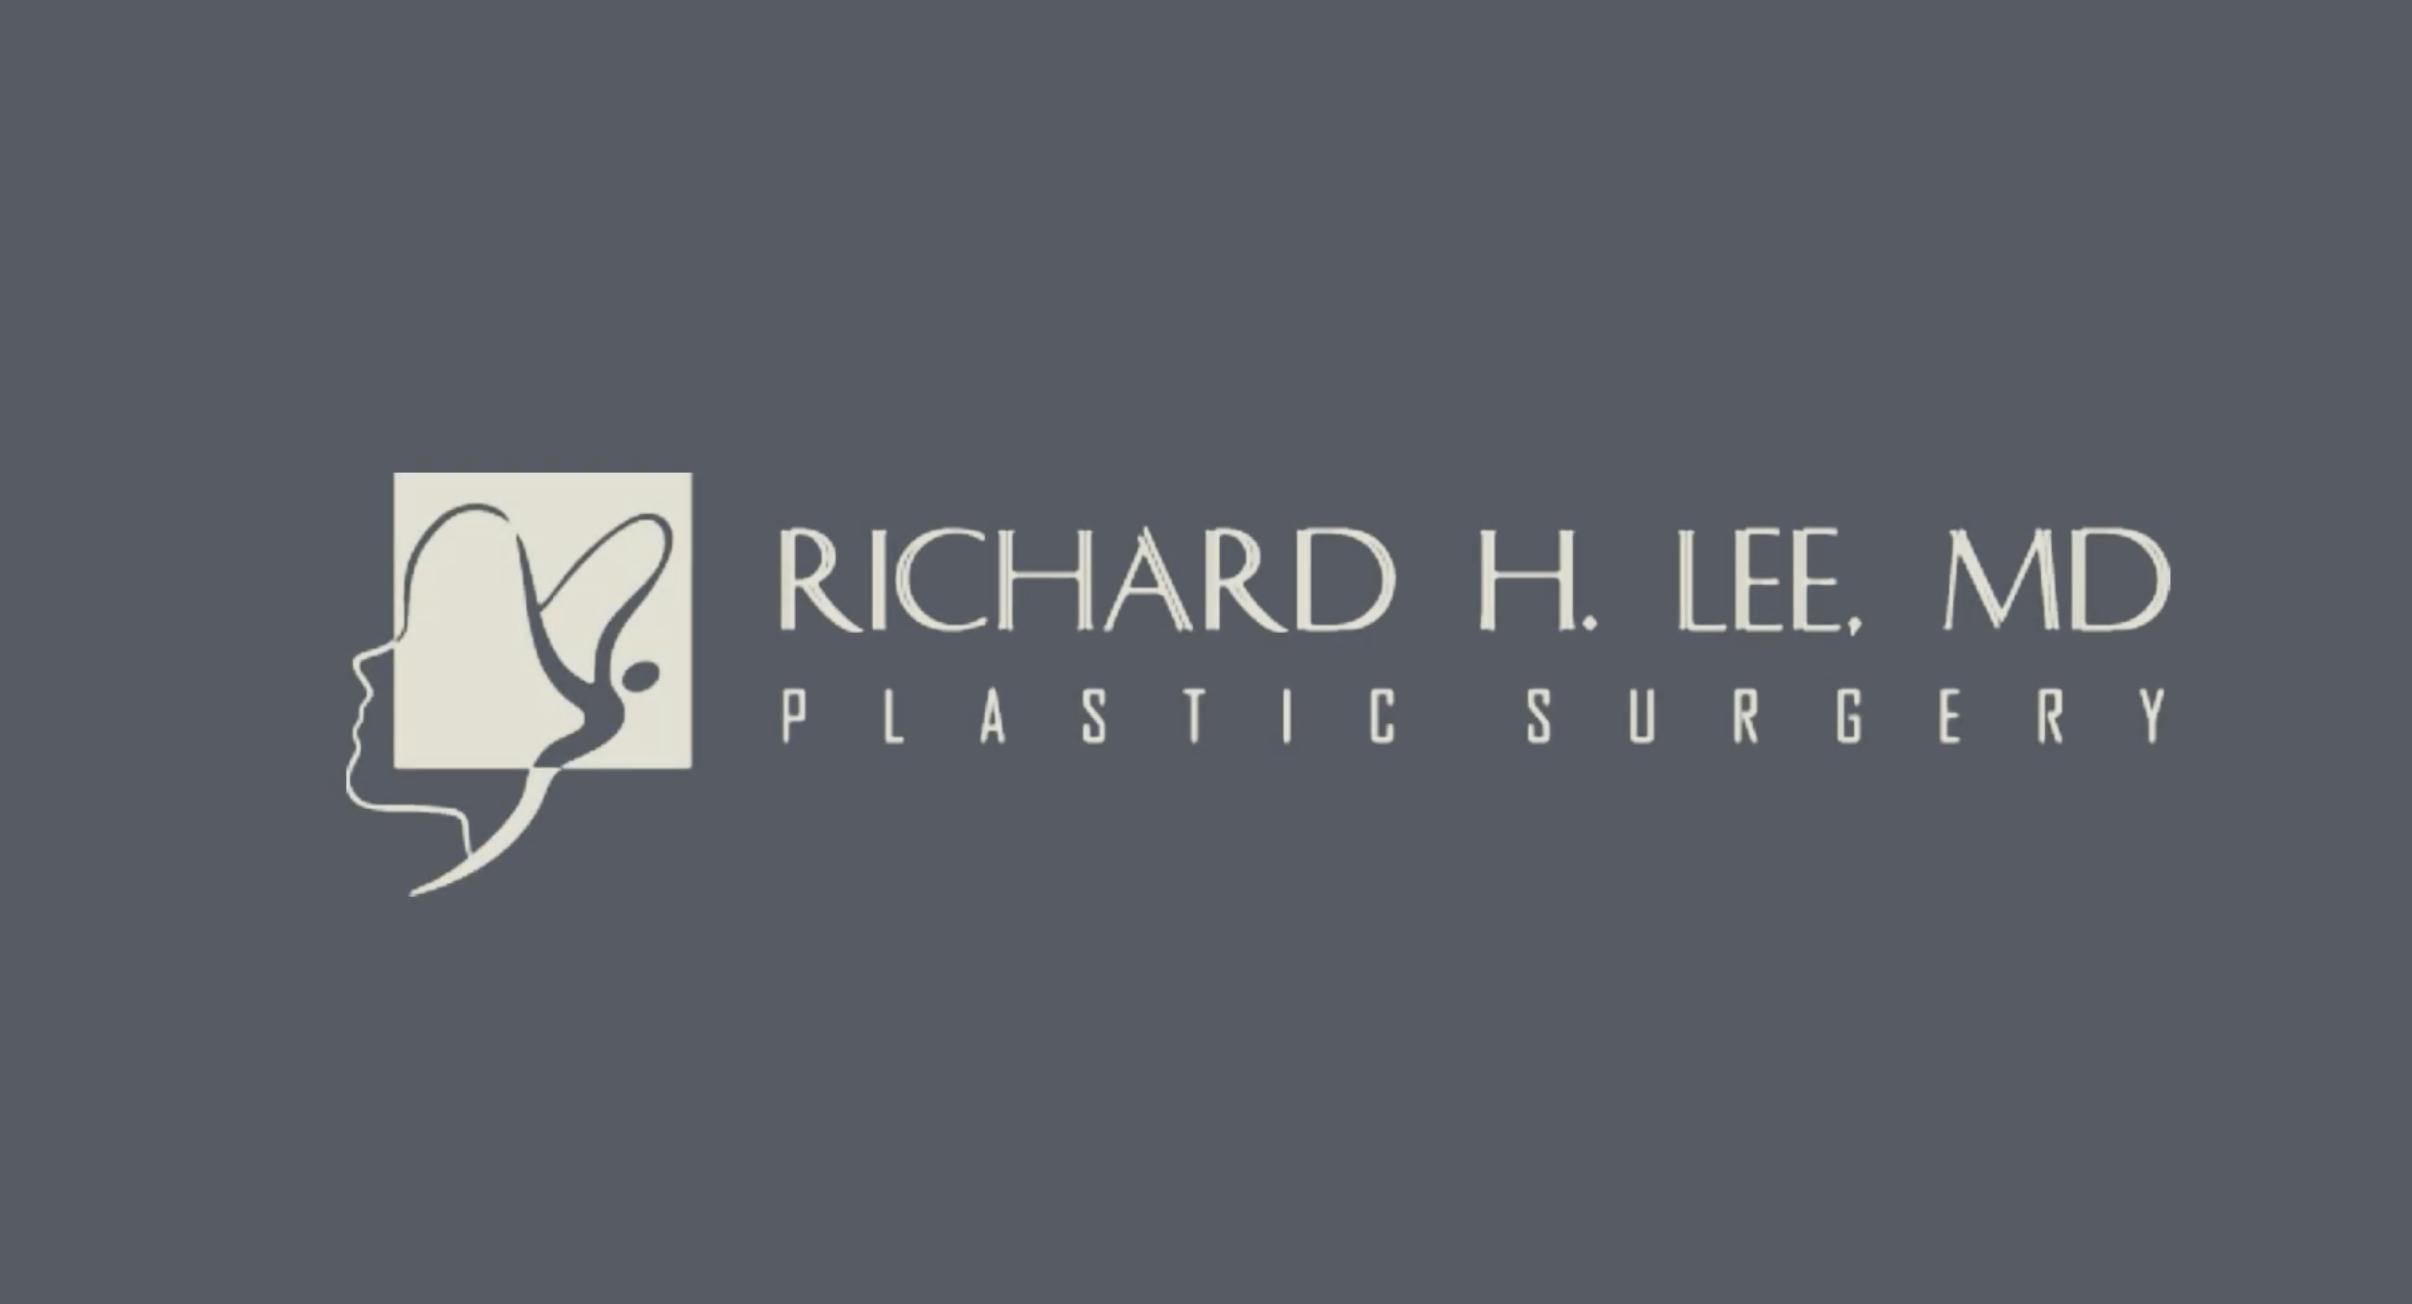 the Richard H. Lee MD Plastic Surgery logo